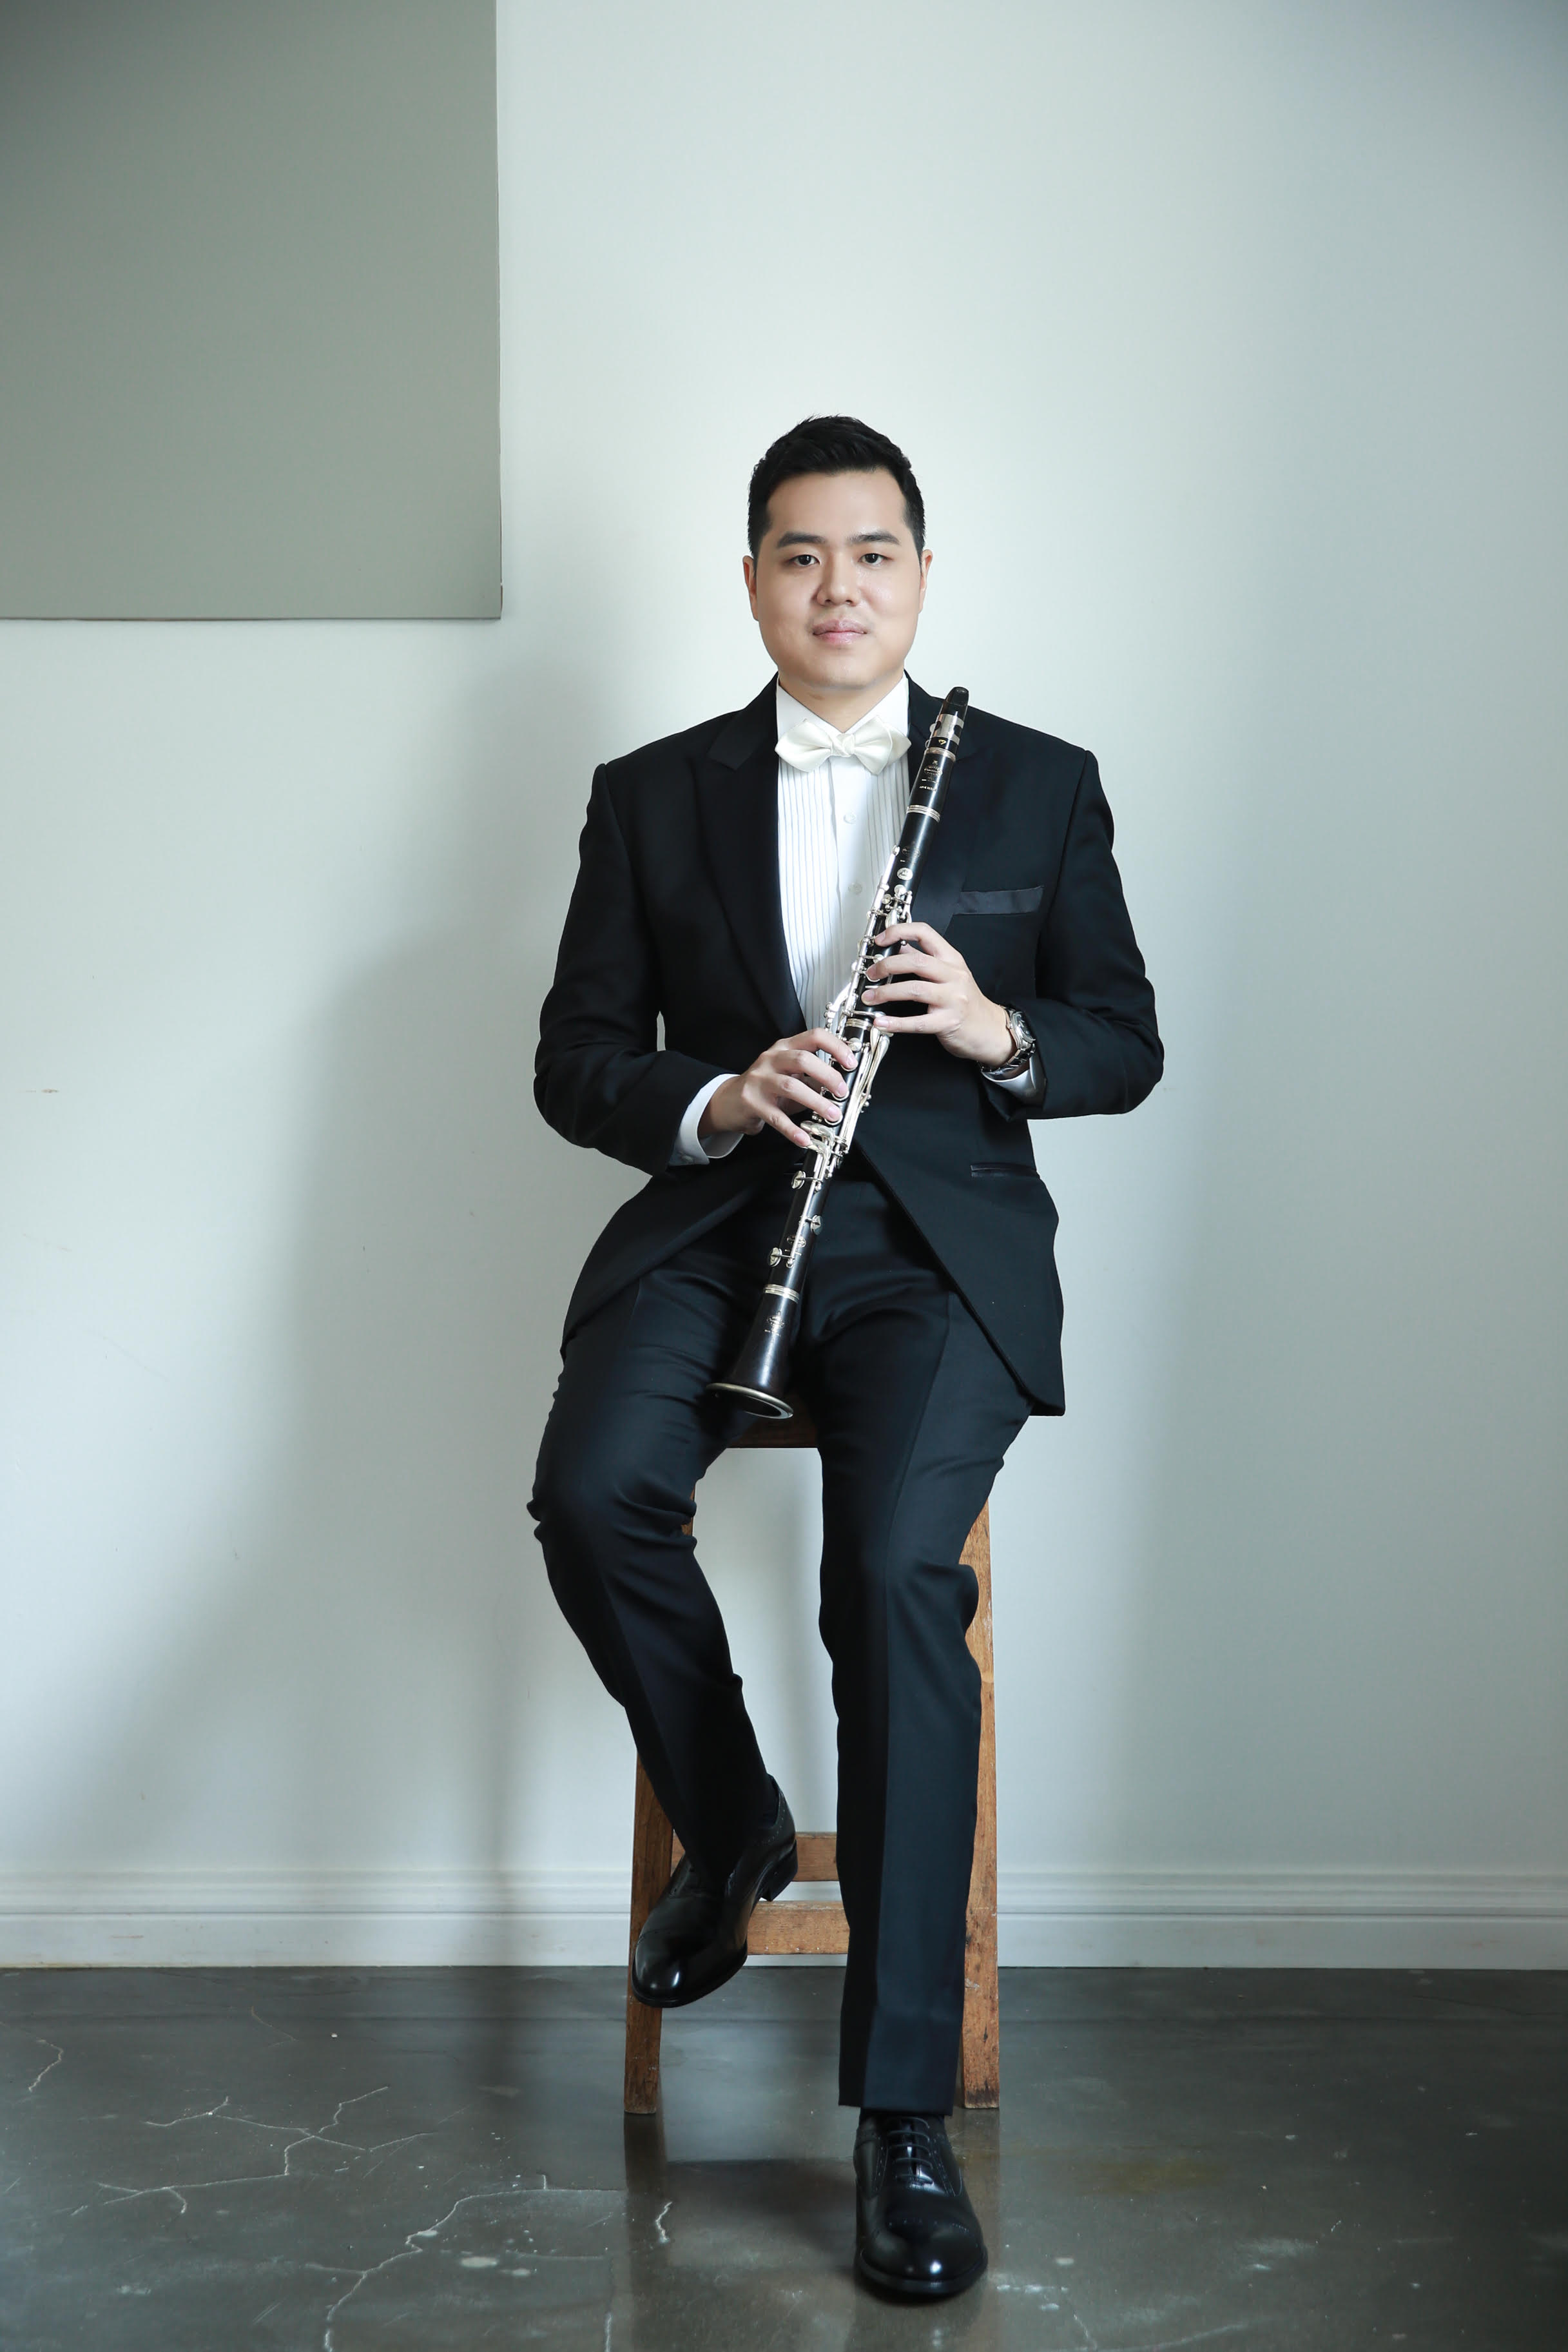 Andy Cho, clarinet